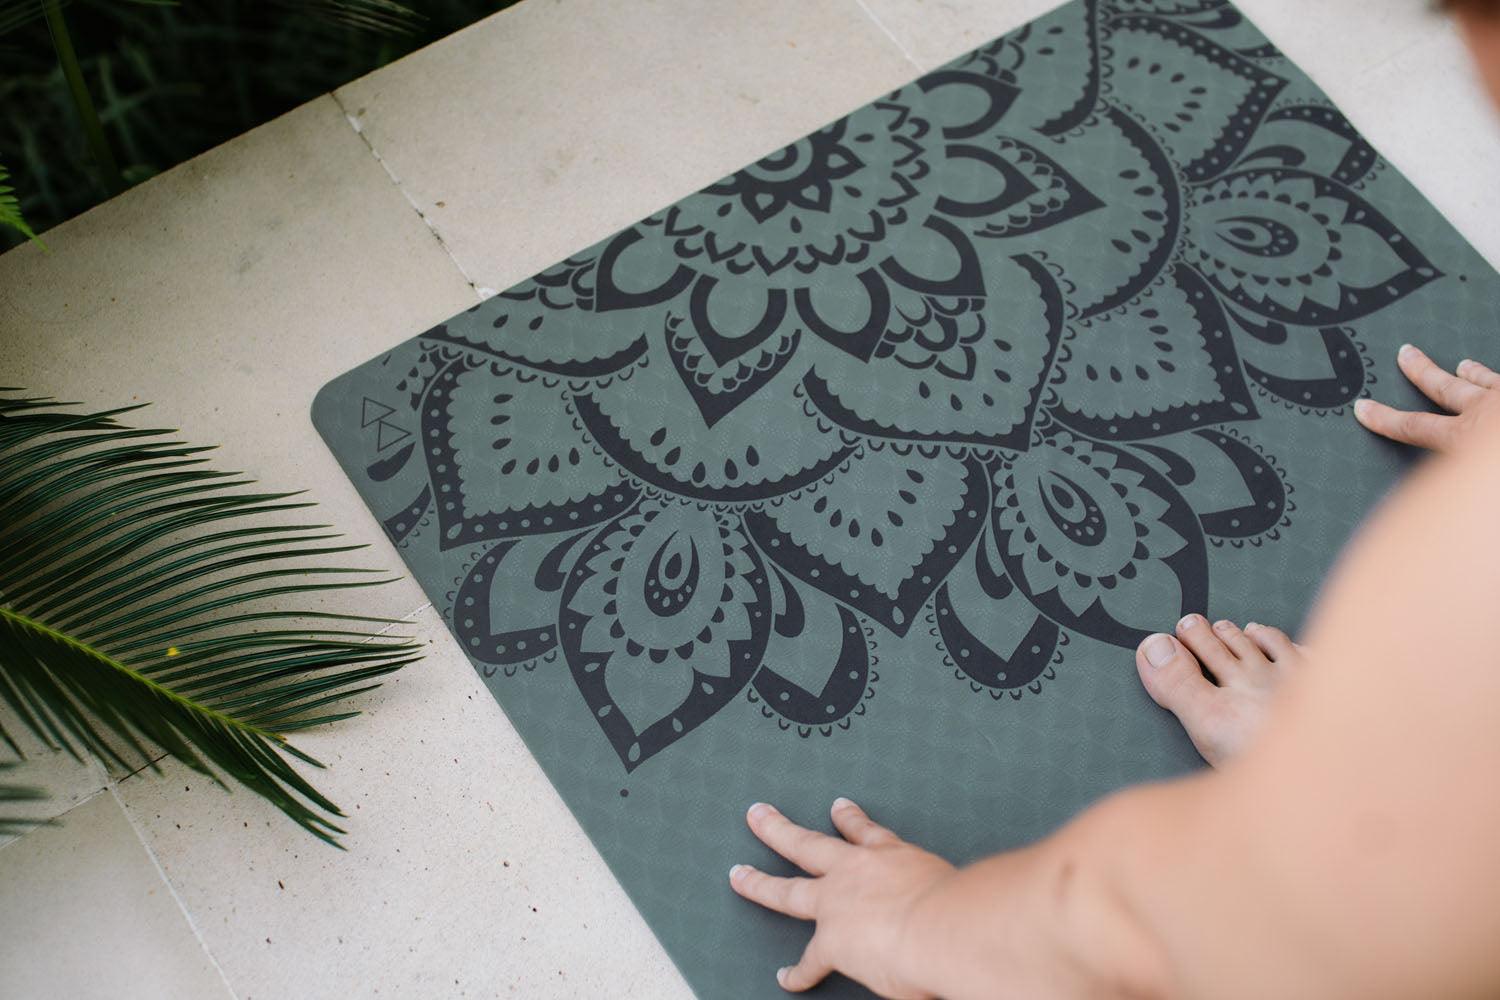 Flow Yoga Mat - Pure Mandala Charcoal 6mm - Ideal Mat For Beginners - Yoga Design Lab 